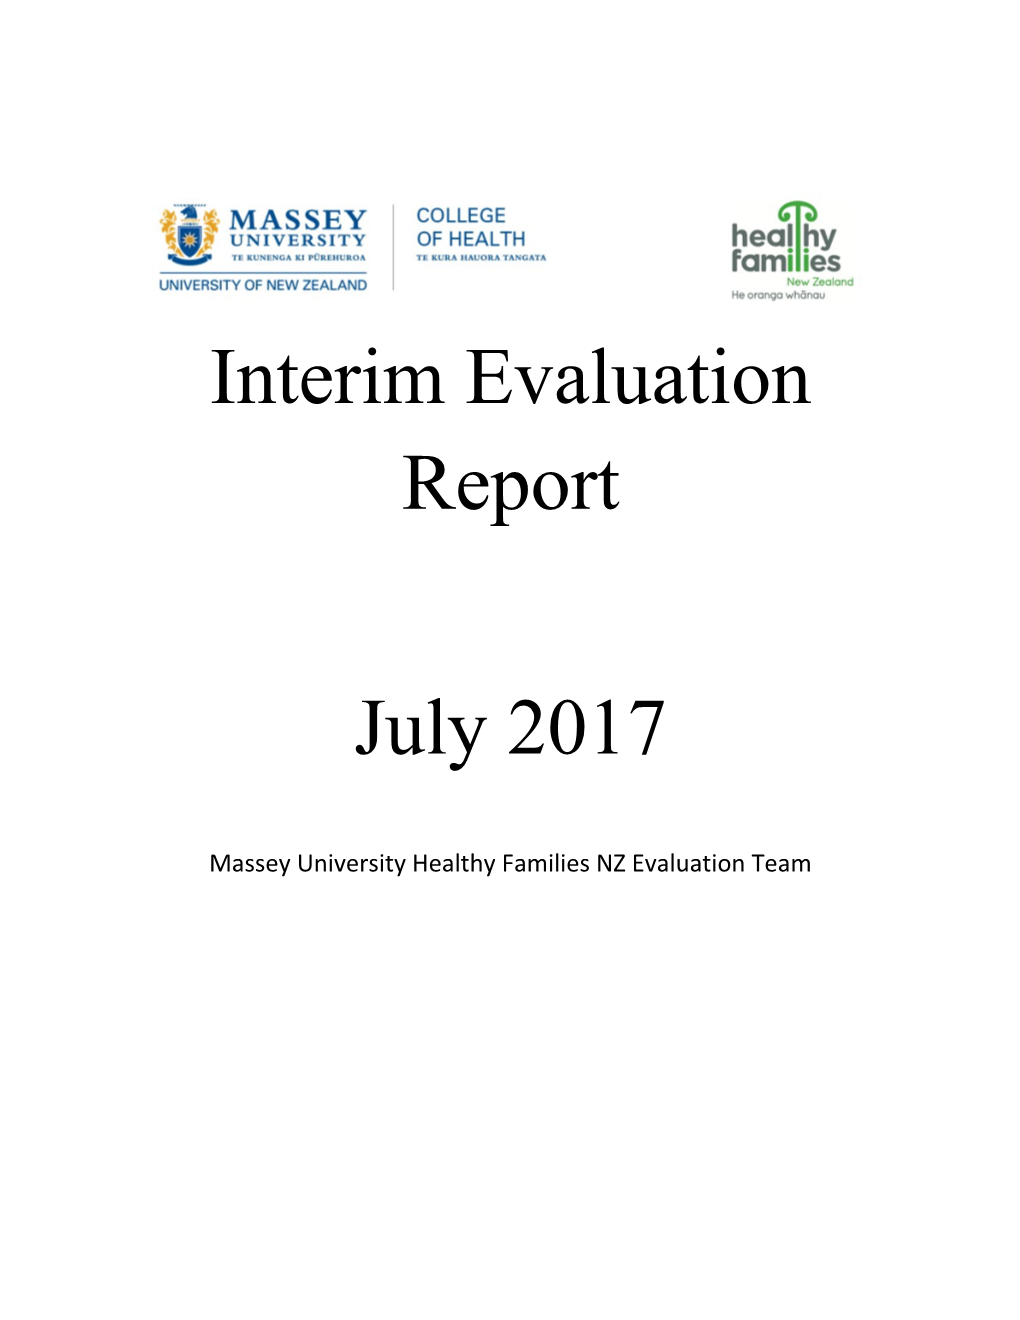 Interim Evaluation Report - Healthy Families NZ